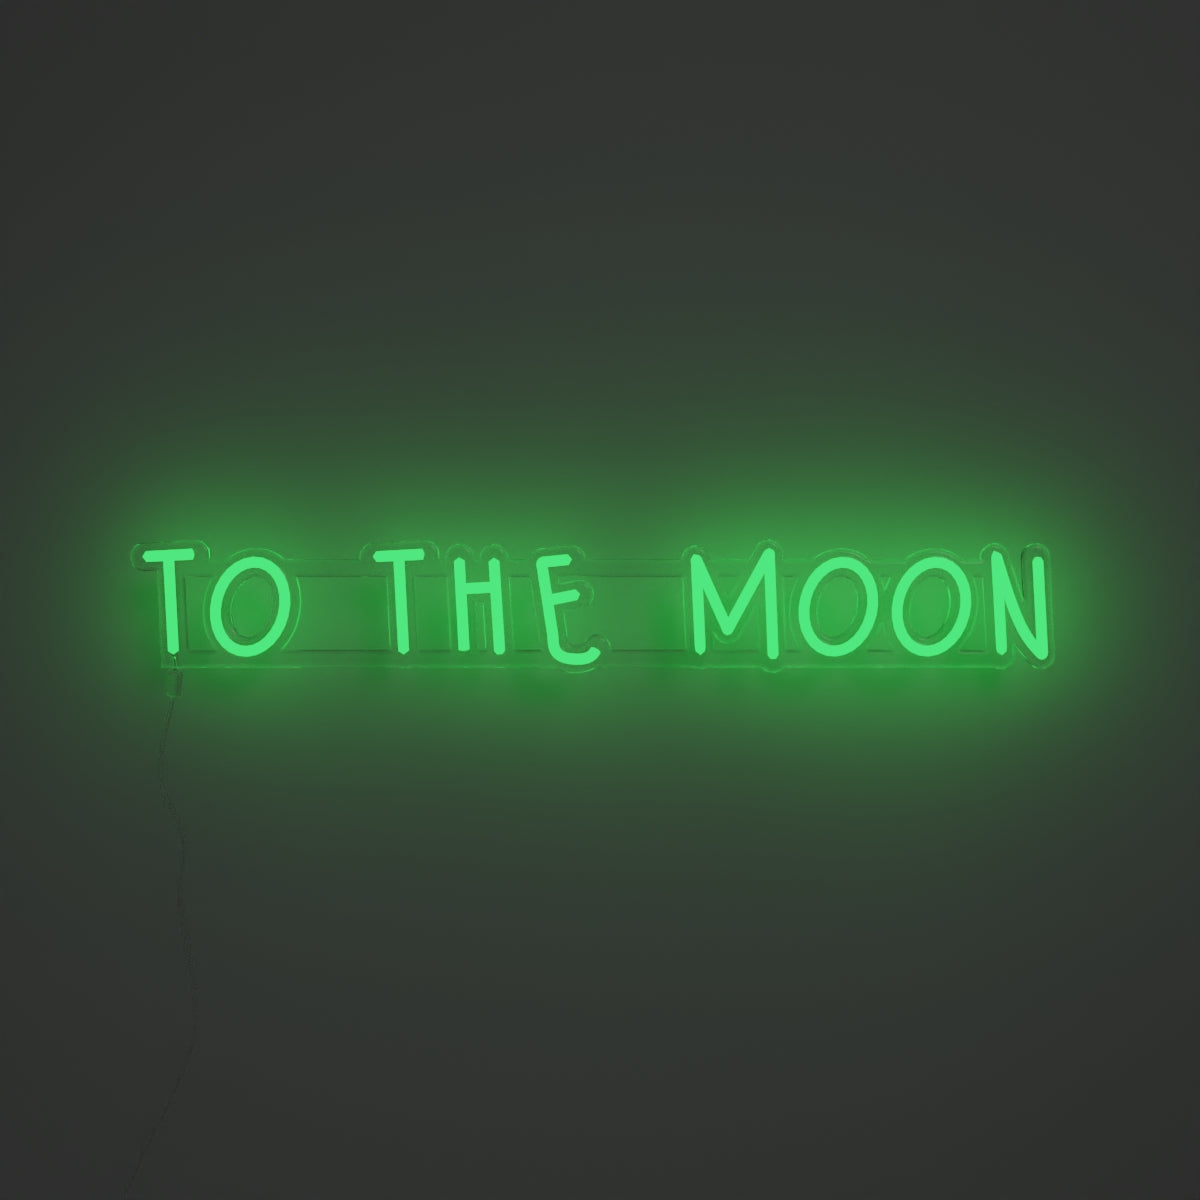 To the moon - Neon Tabela - Neonbir